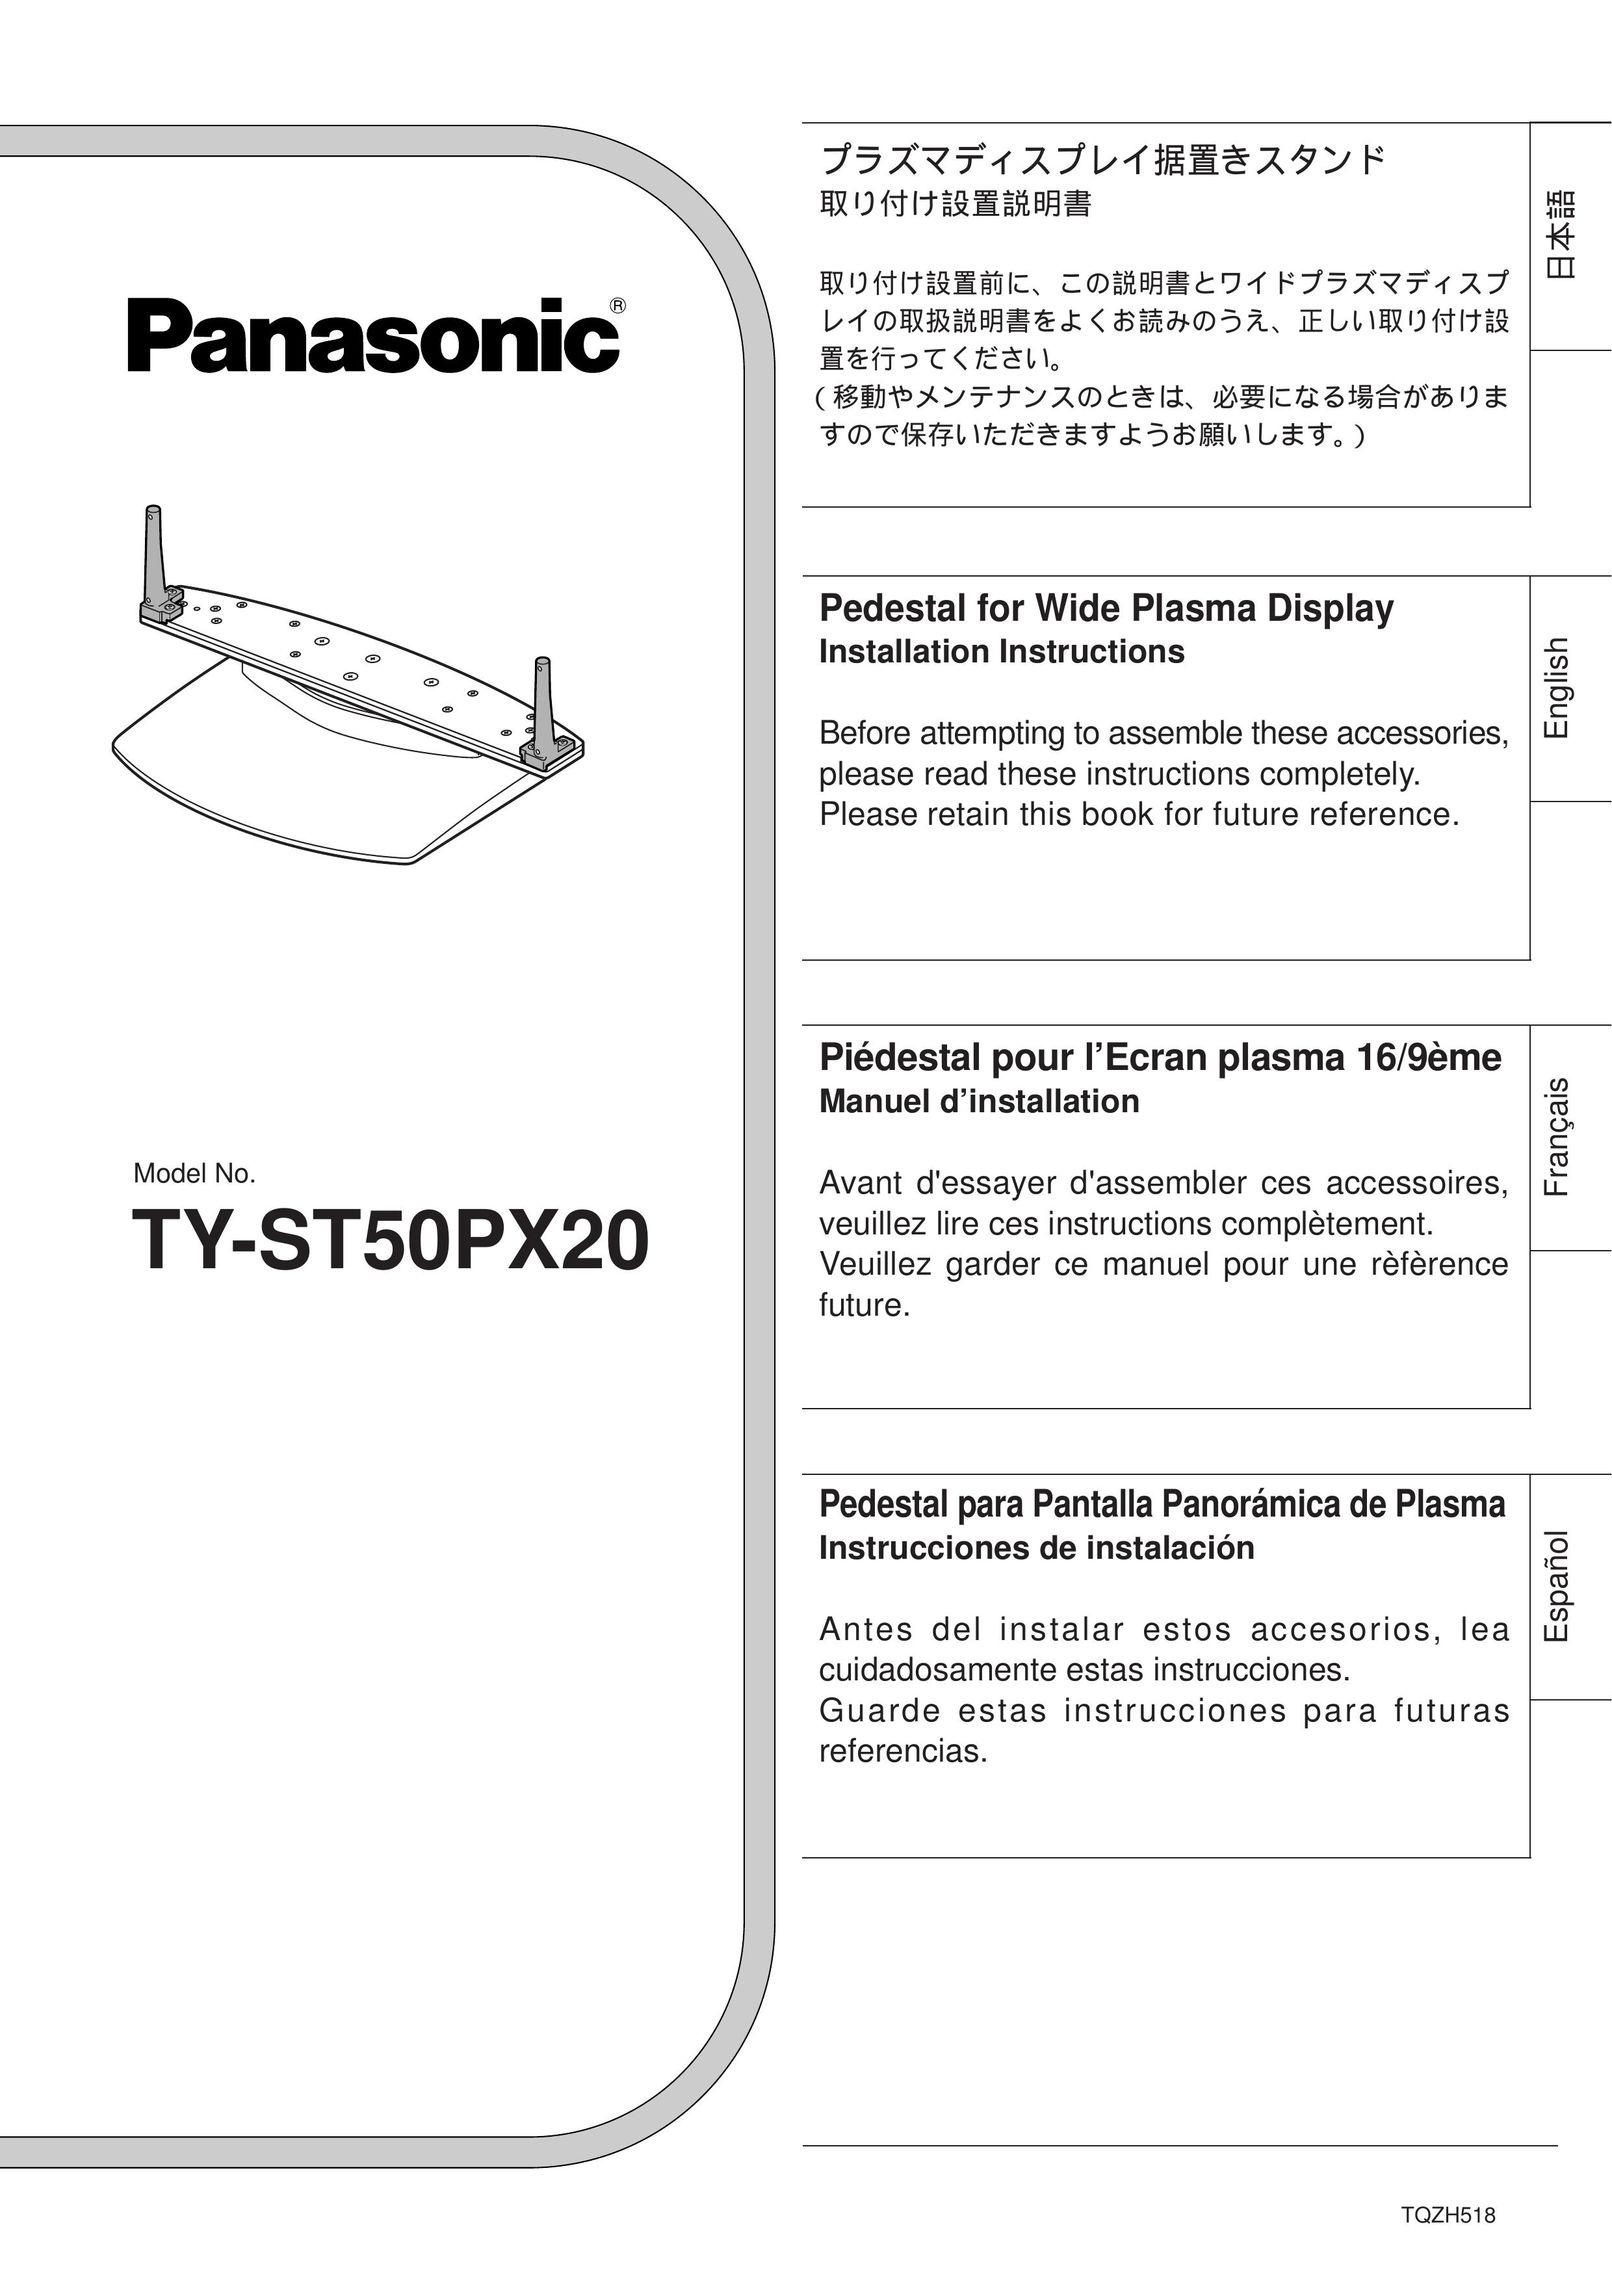 Panasonic TY-ST50PX20 TV Mount User Manual